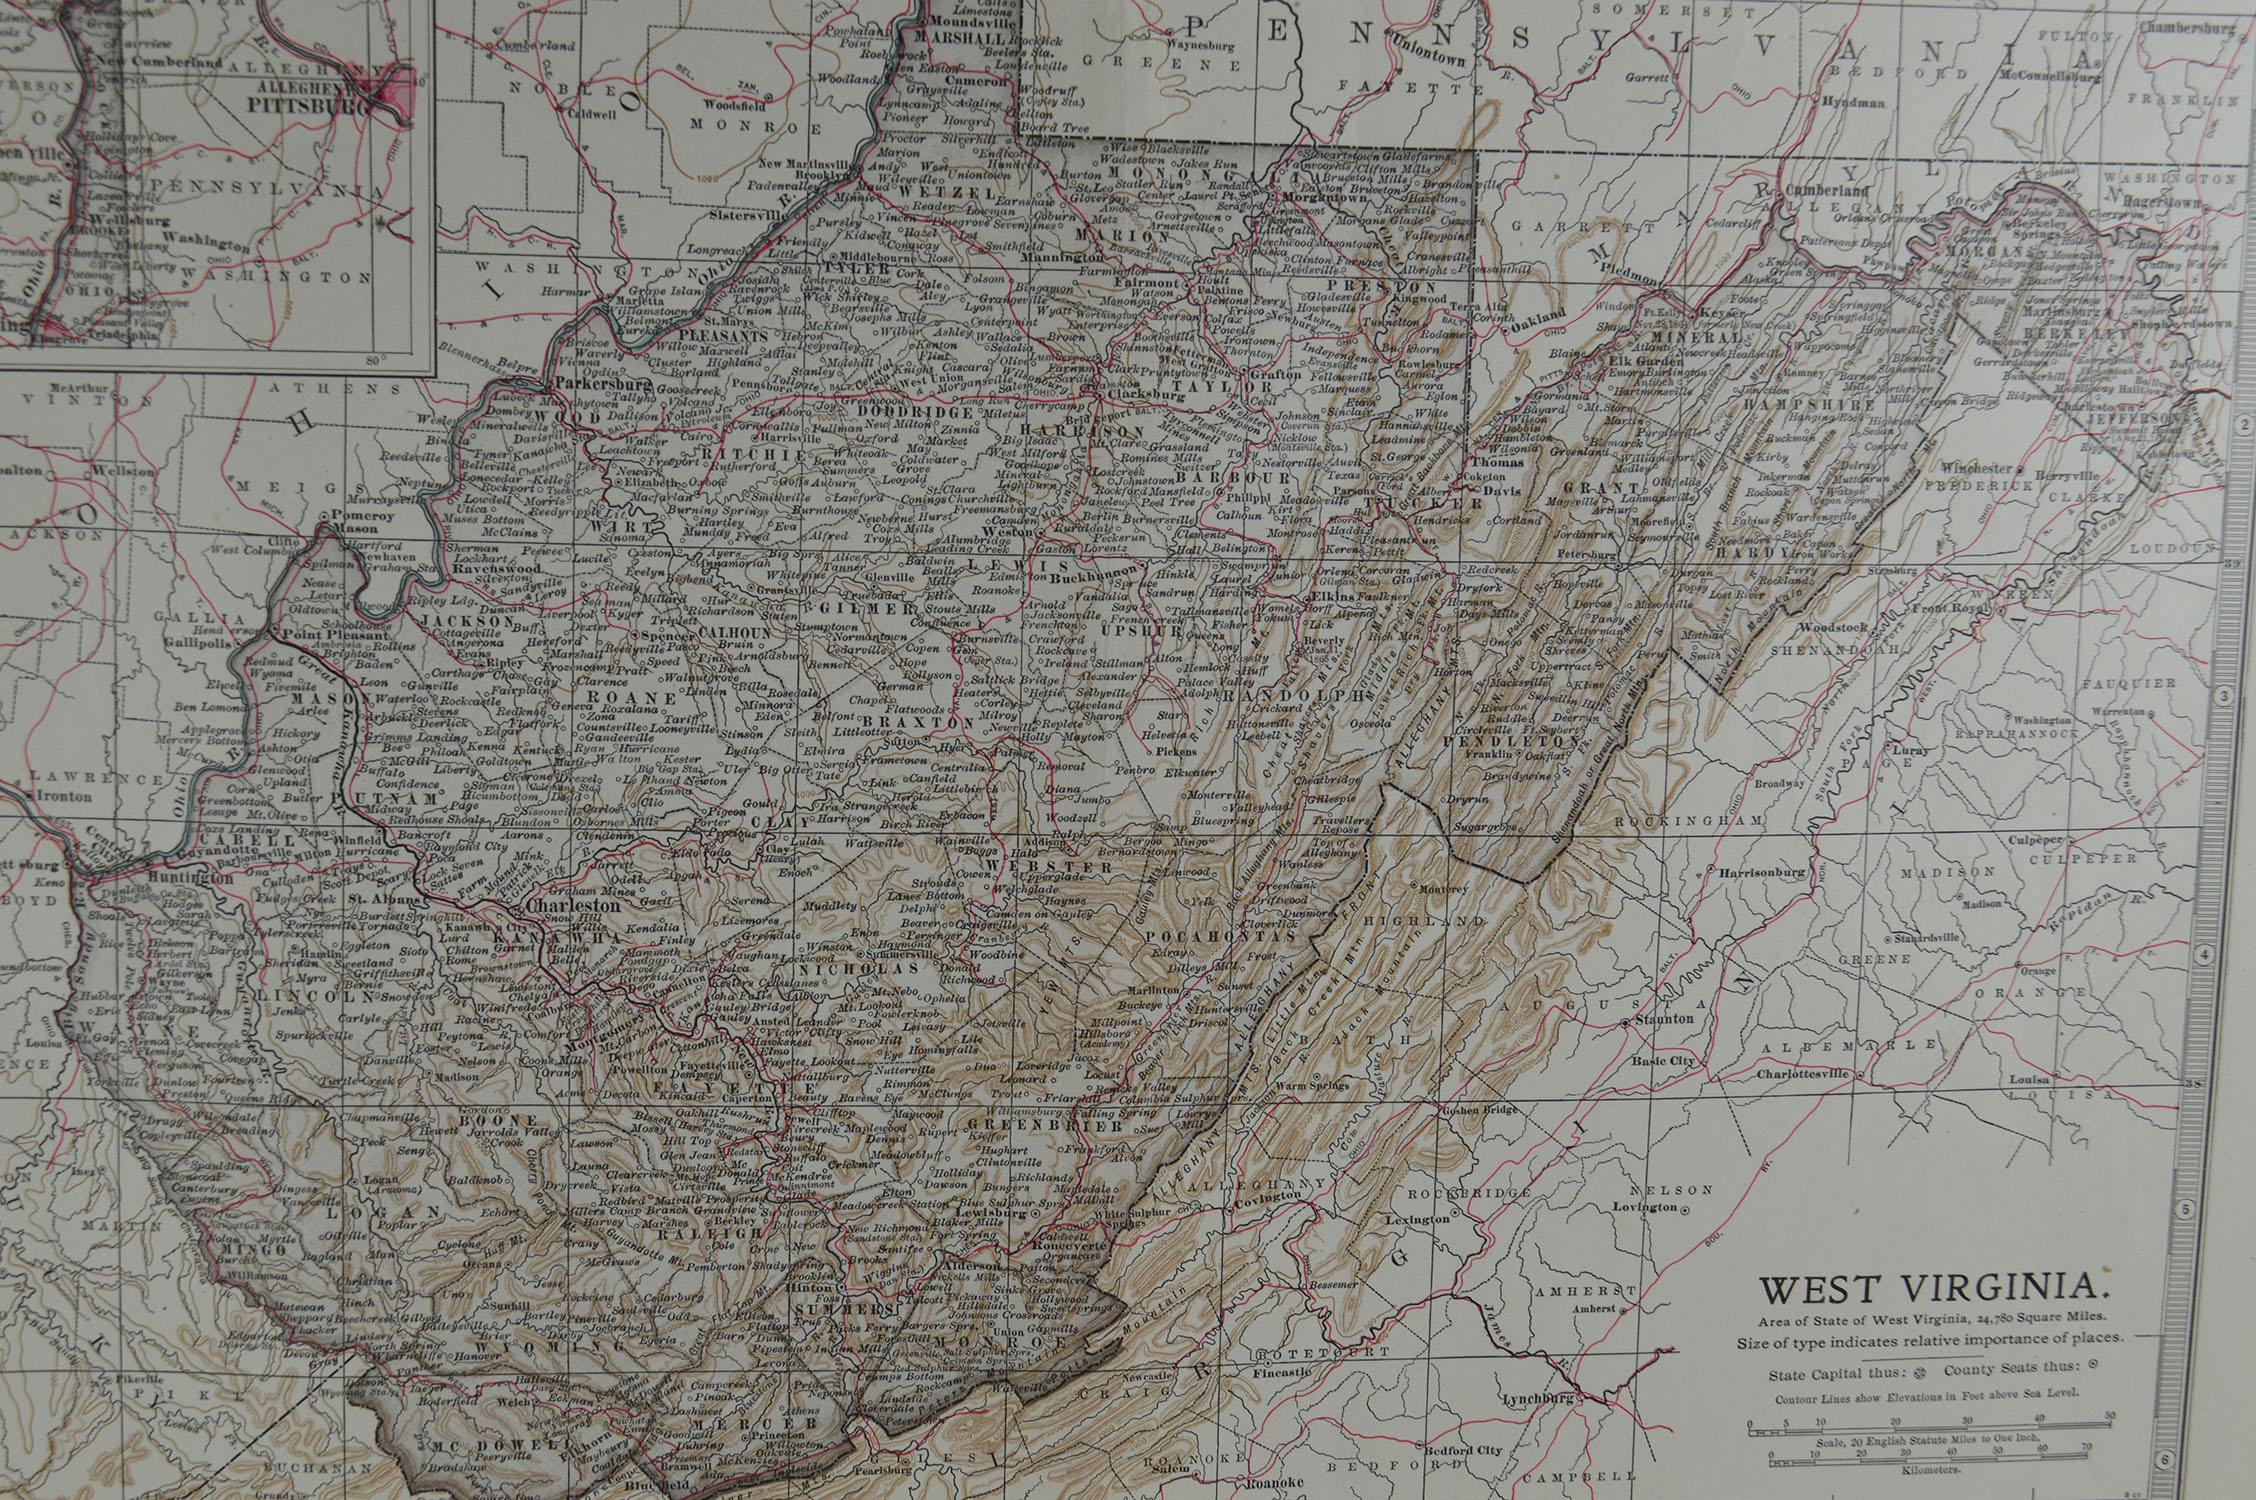 English Original Antique Map of West Virginia, circa 1890